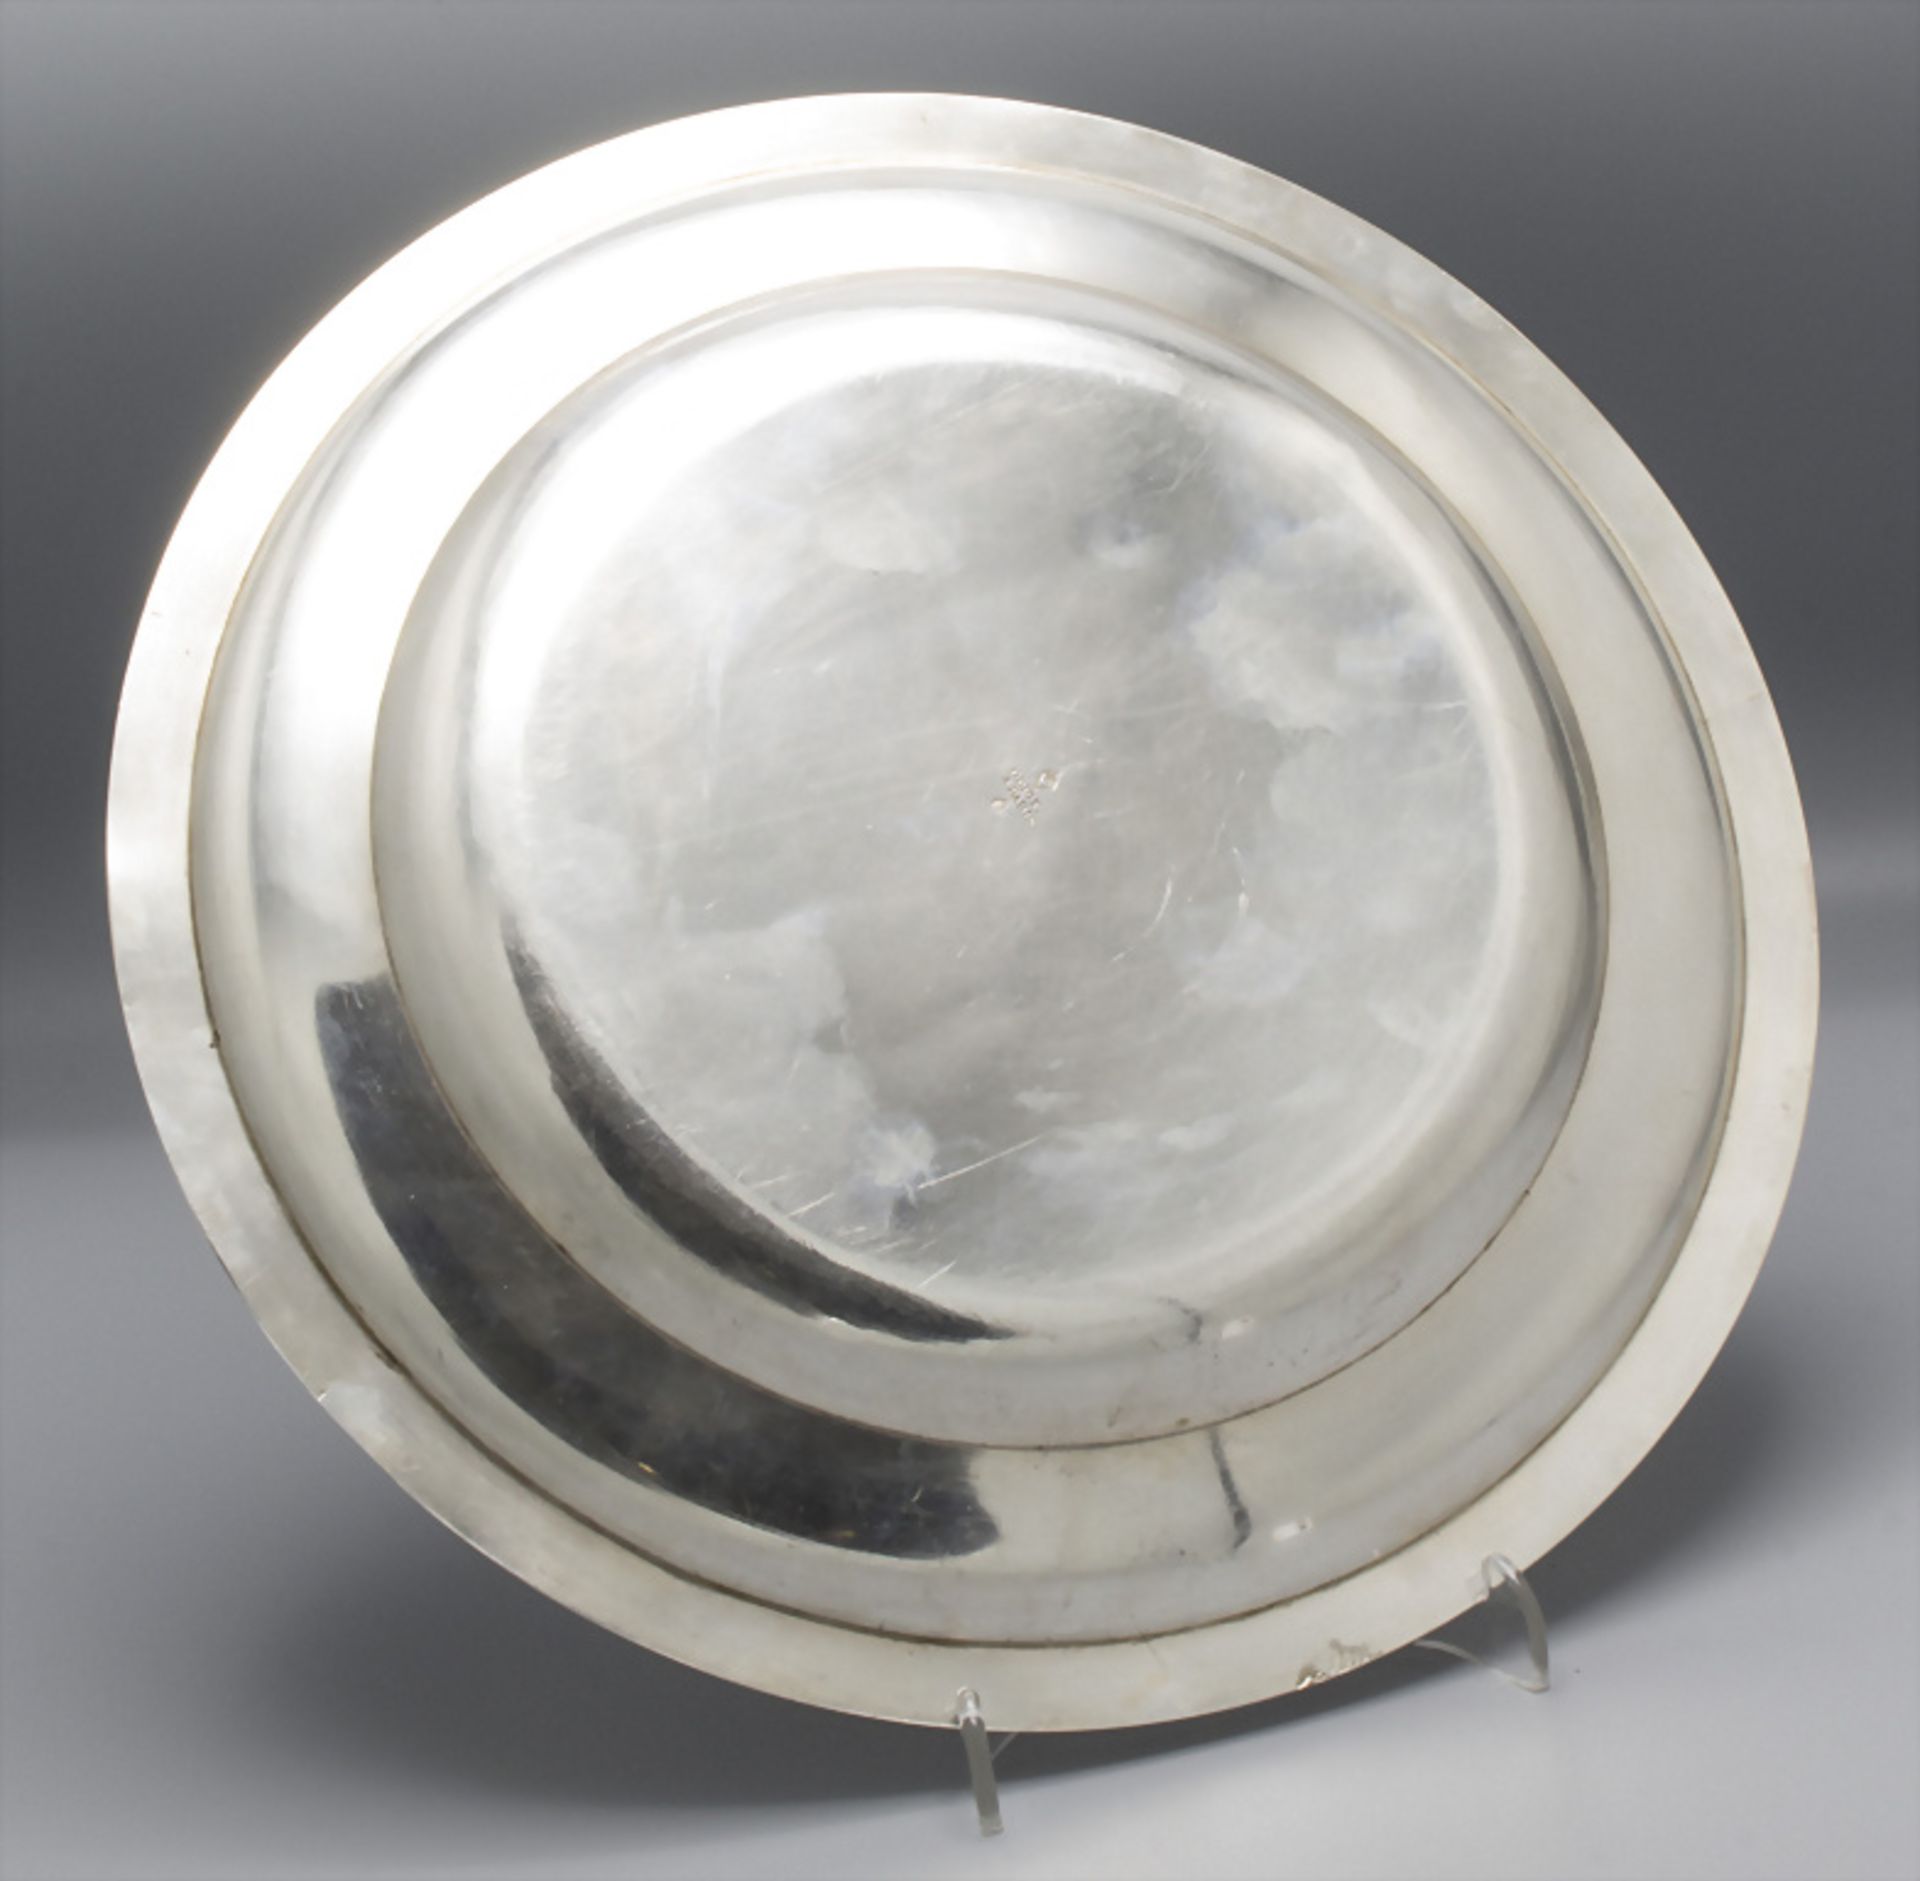 12 Silberteller / 12 assiettes en argent massif / A set of 12 silver plates, Odiot, Paris, um 1870 - Image 29 of 29